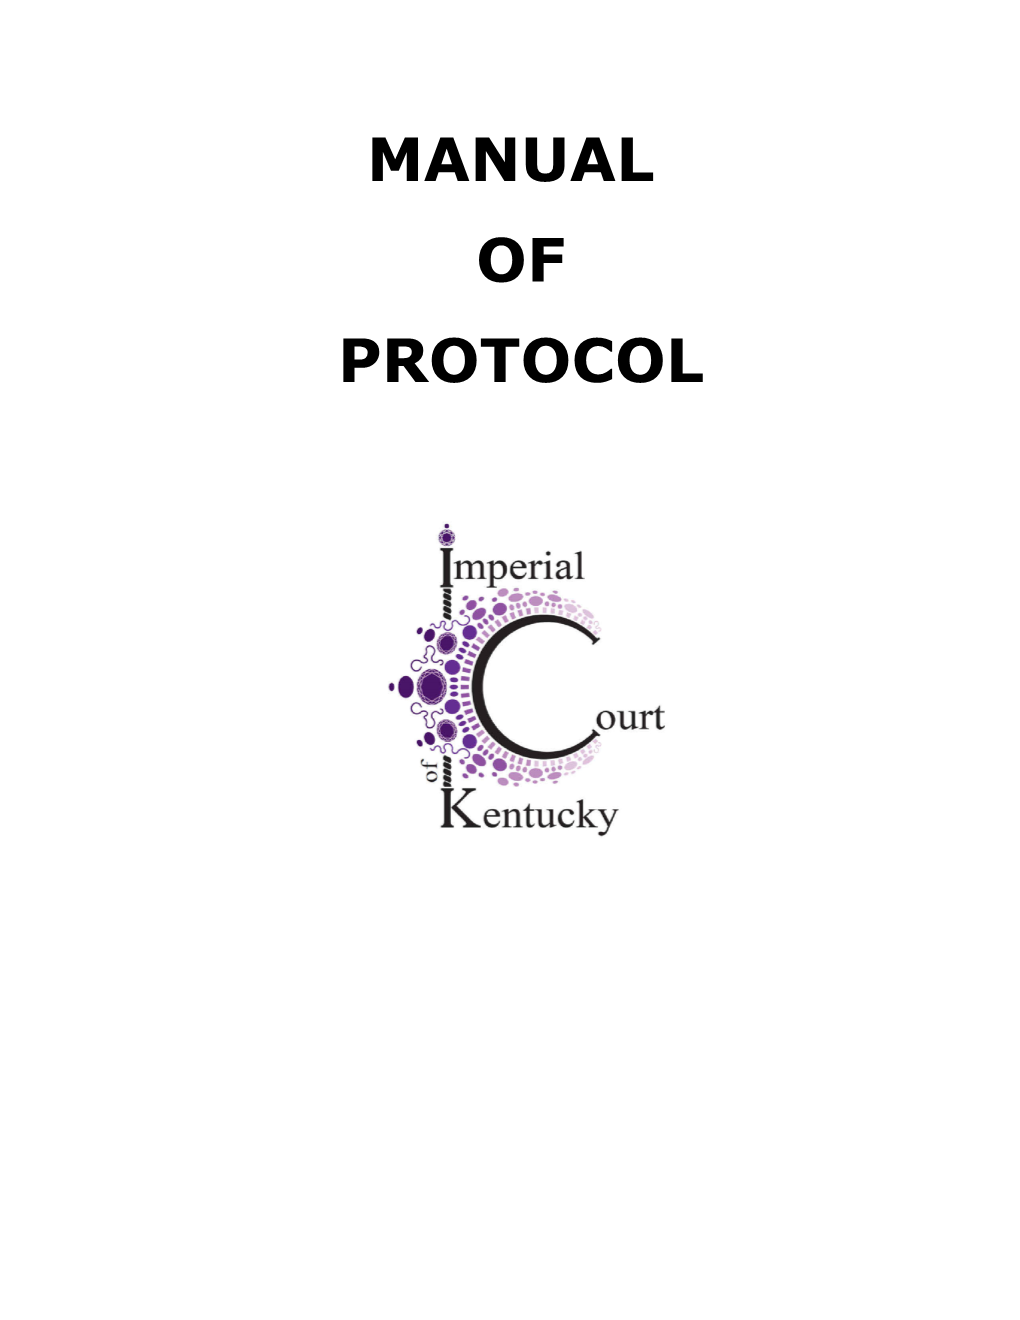 Manual of Protocol